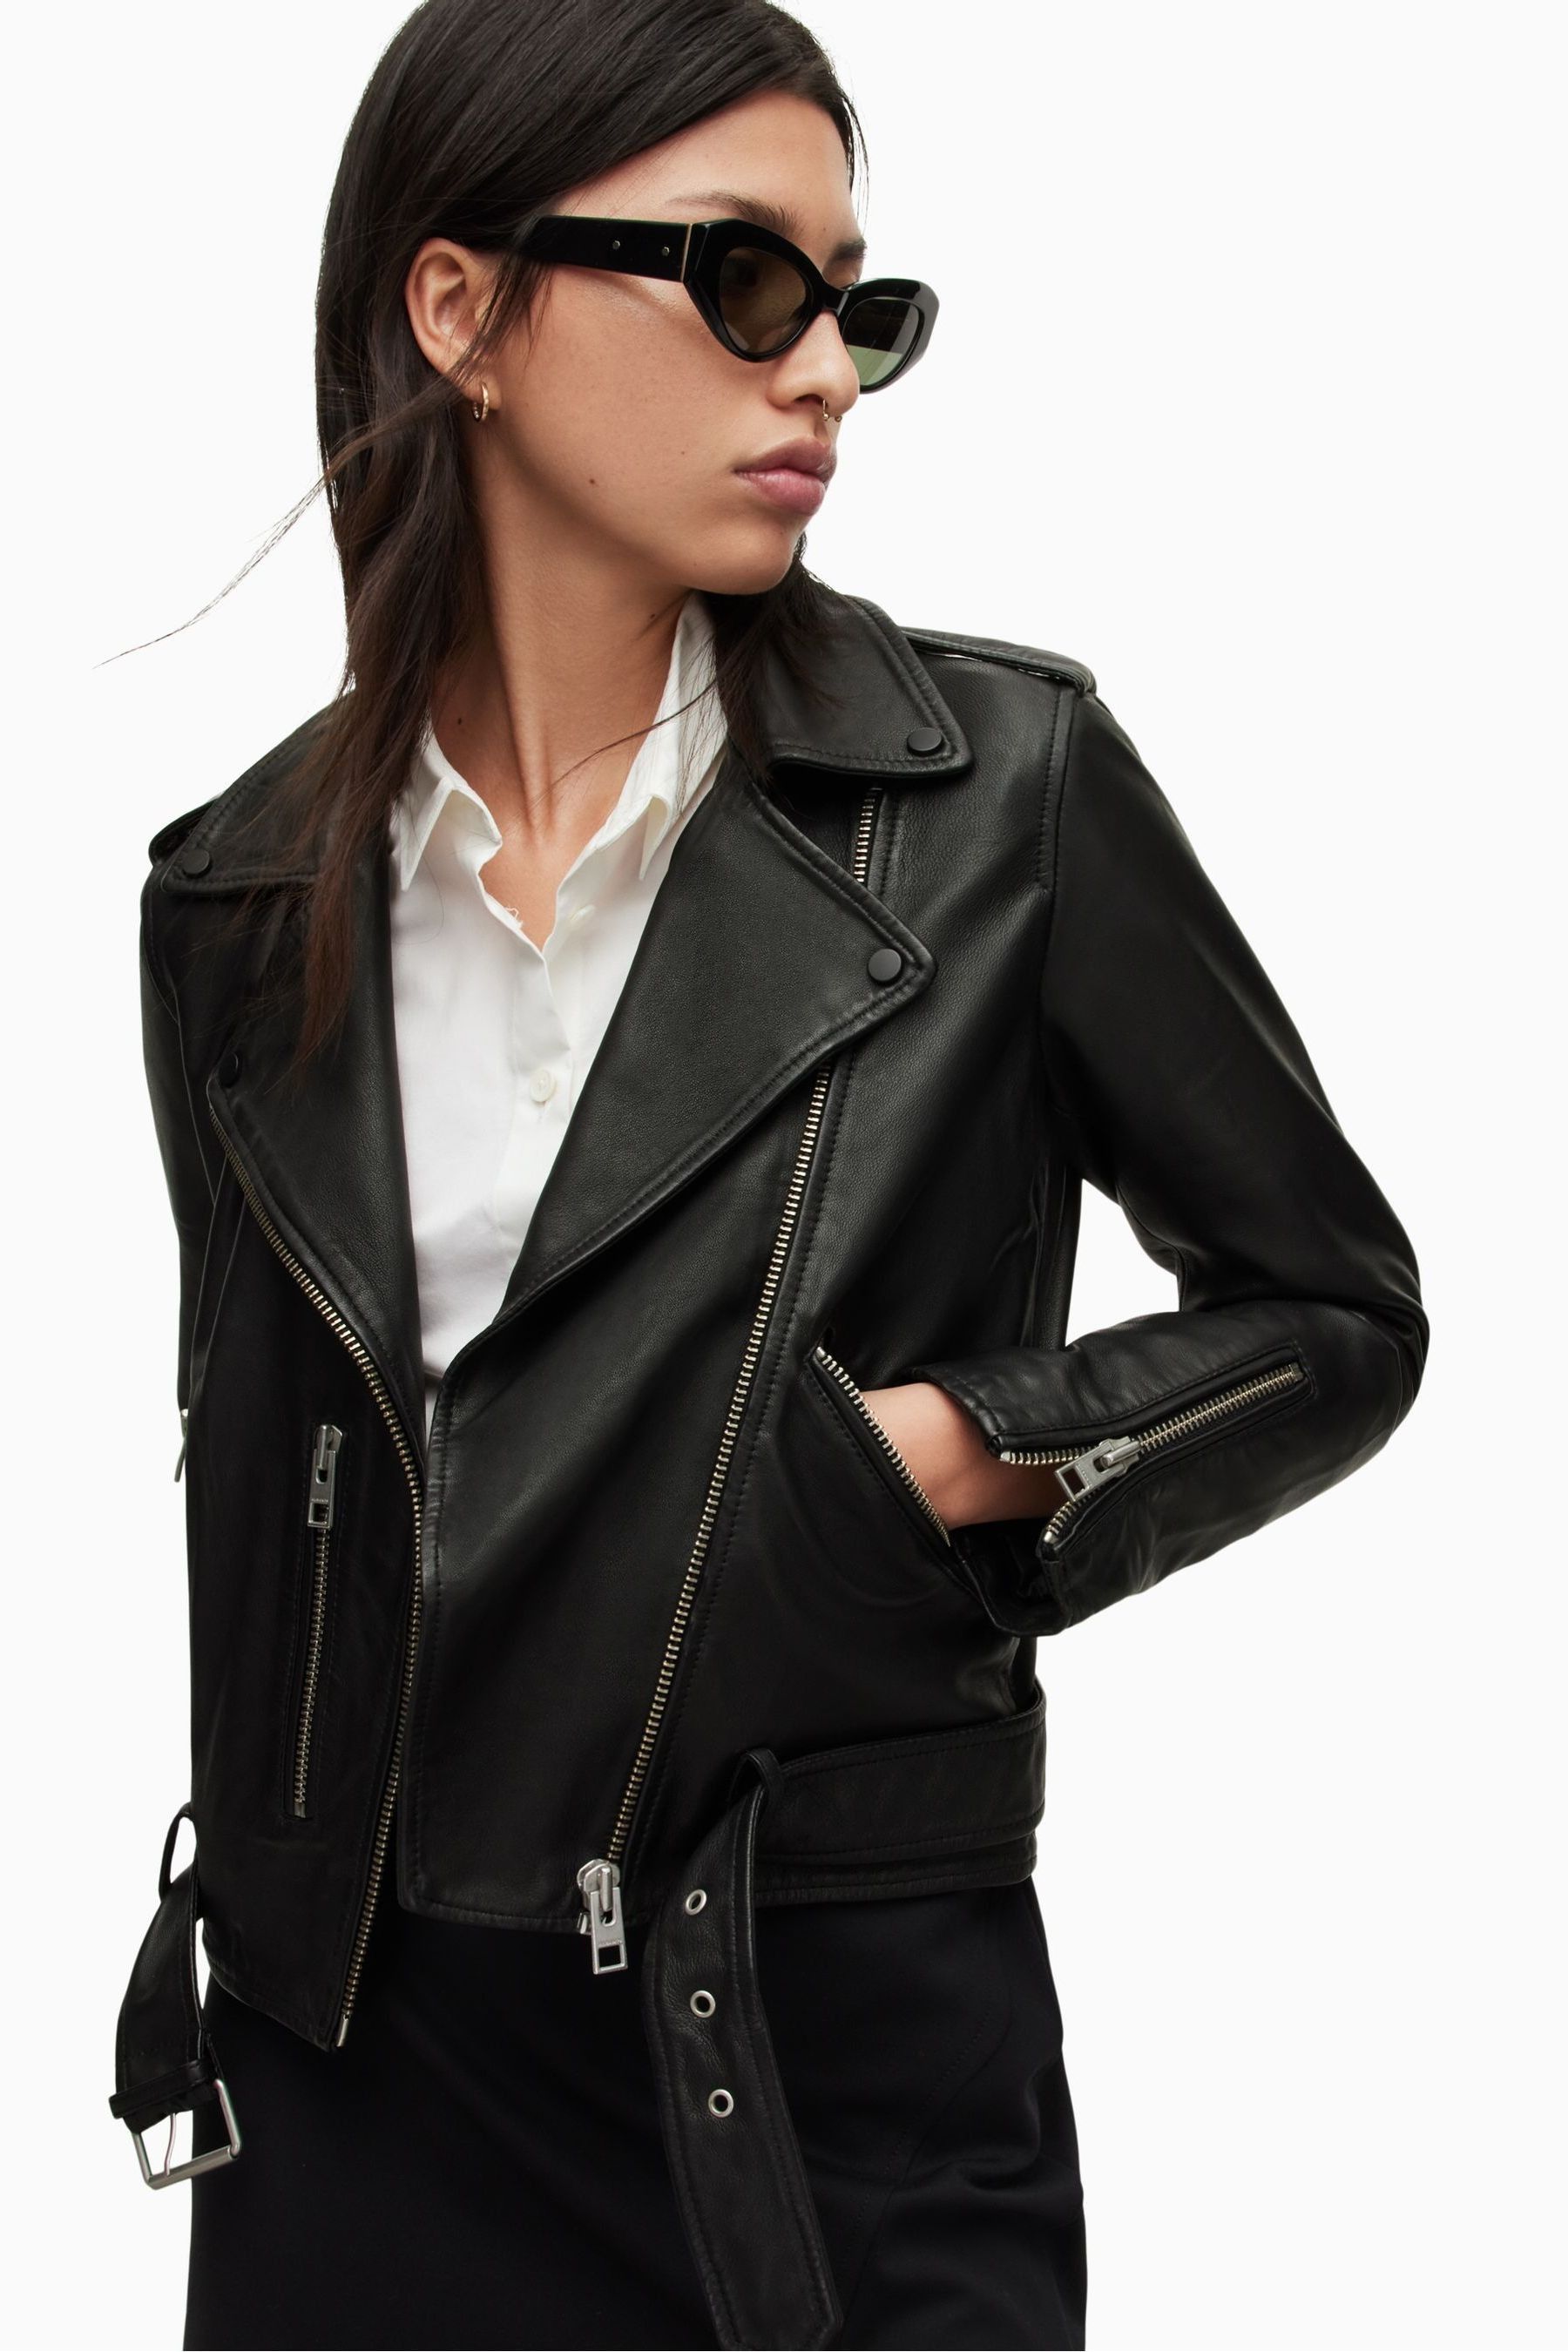 Buy AllSaints Black Balfern Leather Biker Jacket from the Next UK